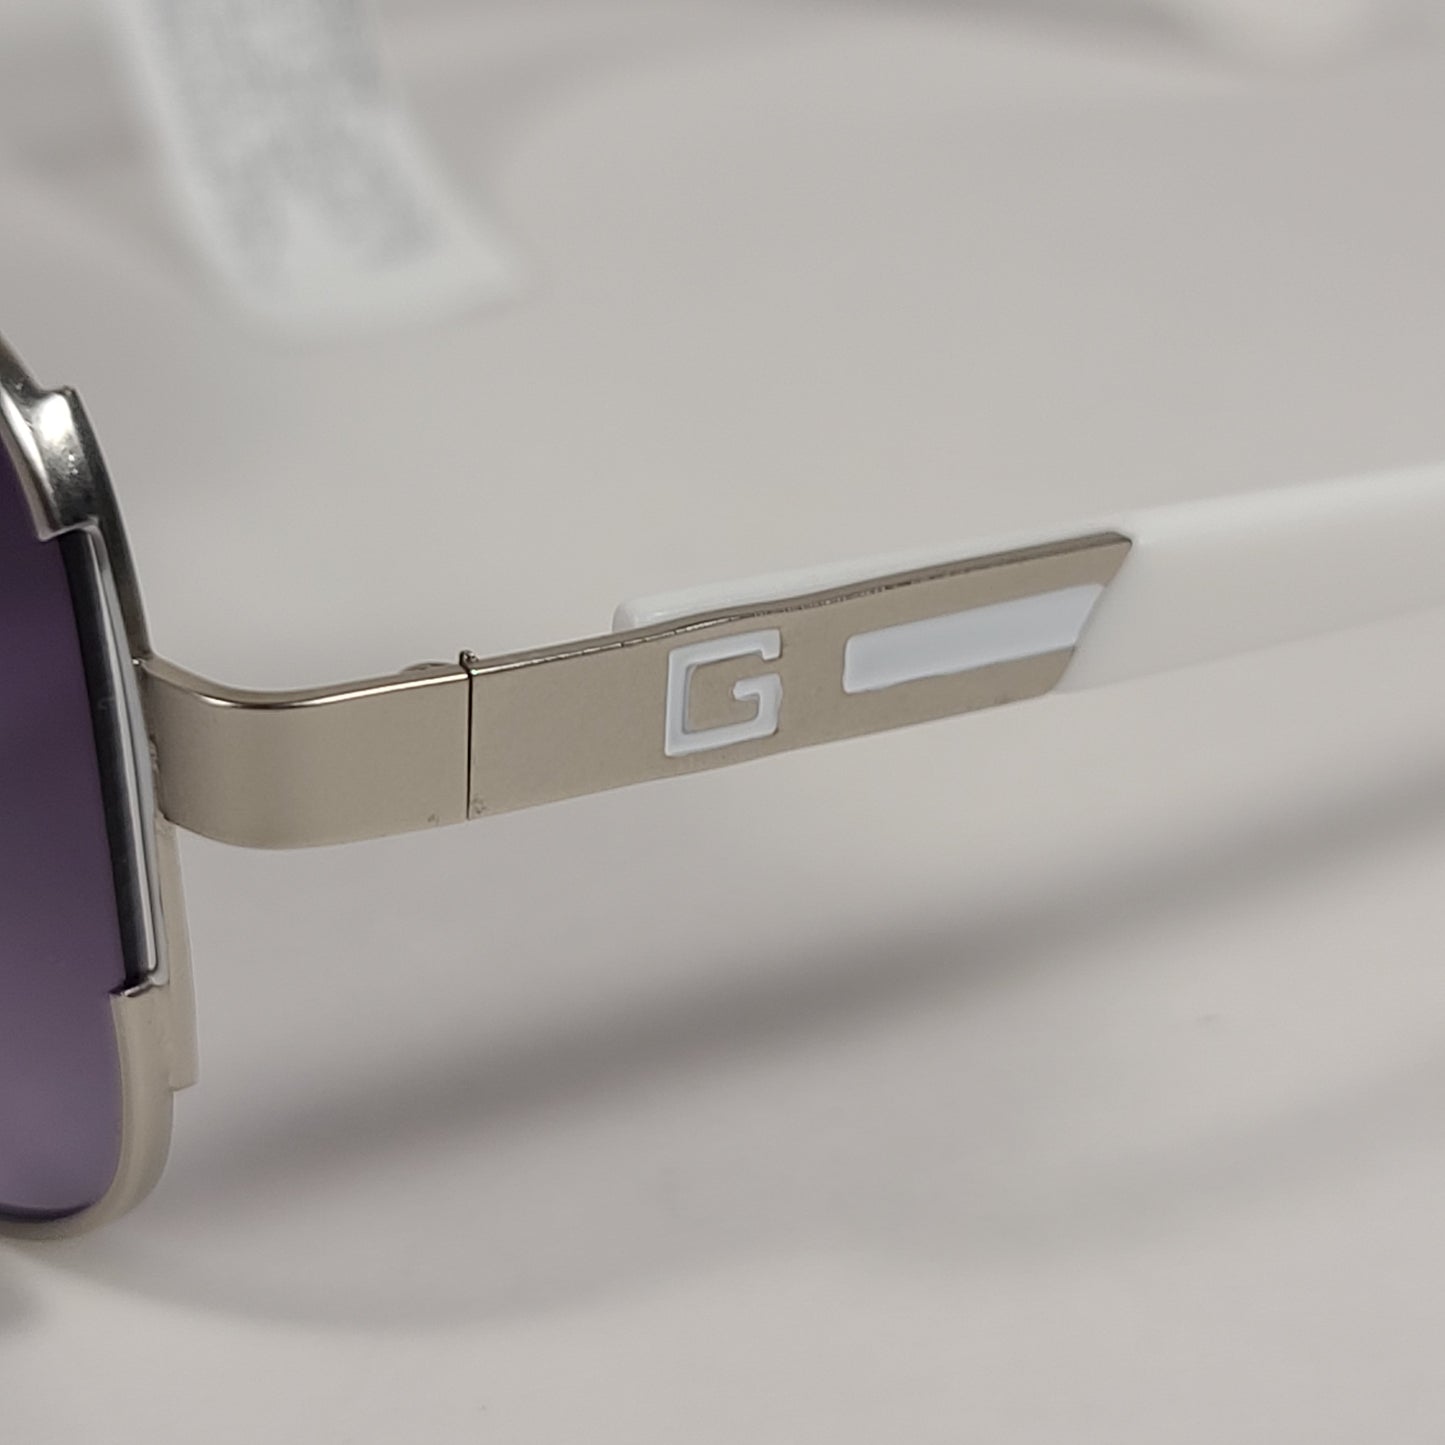 Guess Navigator Sunglasses Silver And White Frame Smoke Gradient Lens GF0227 10W - Sunglasses